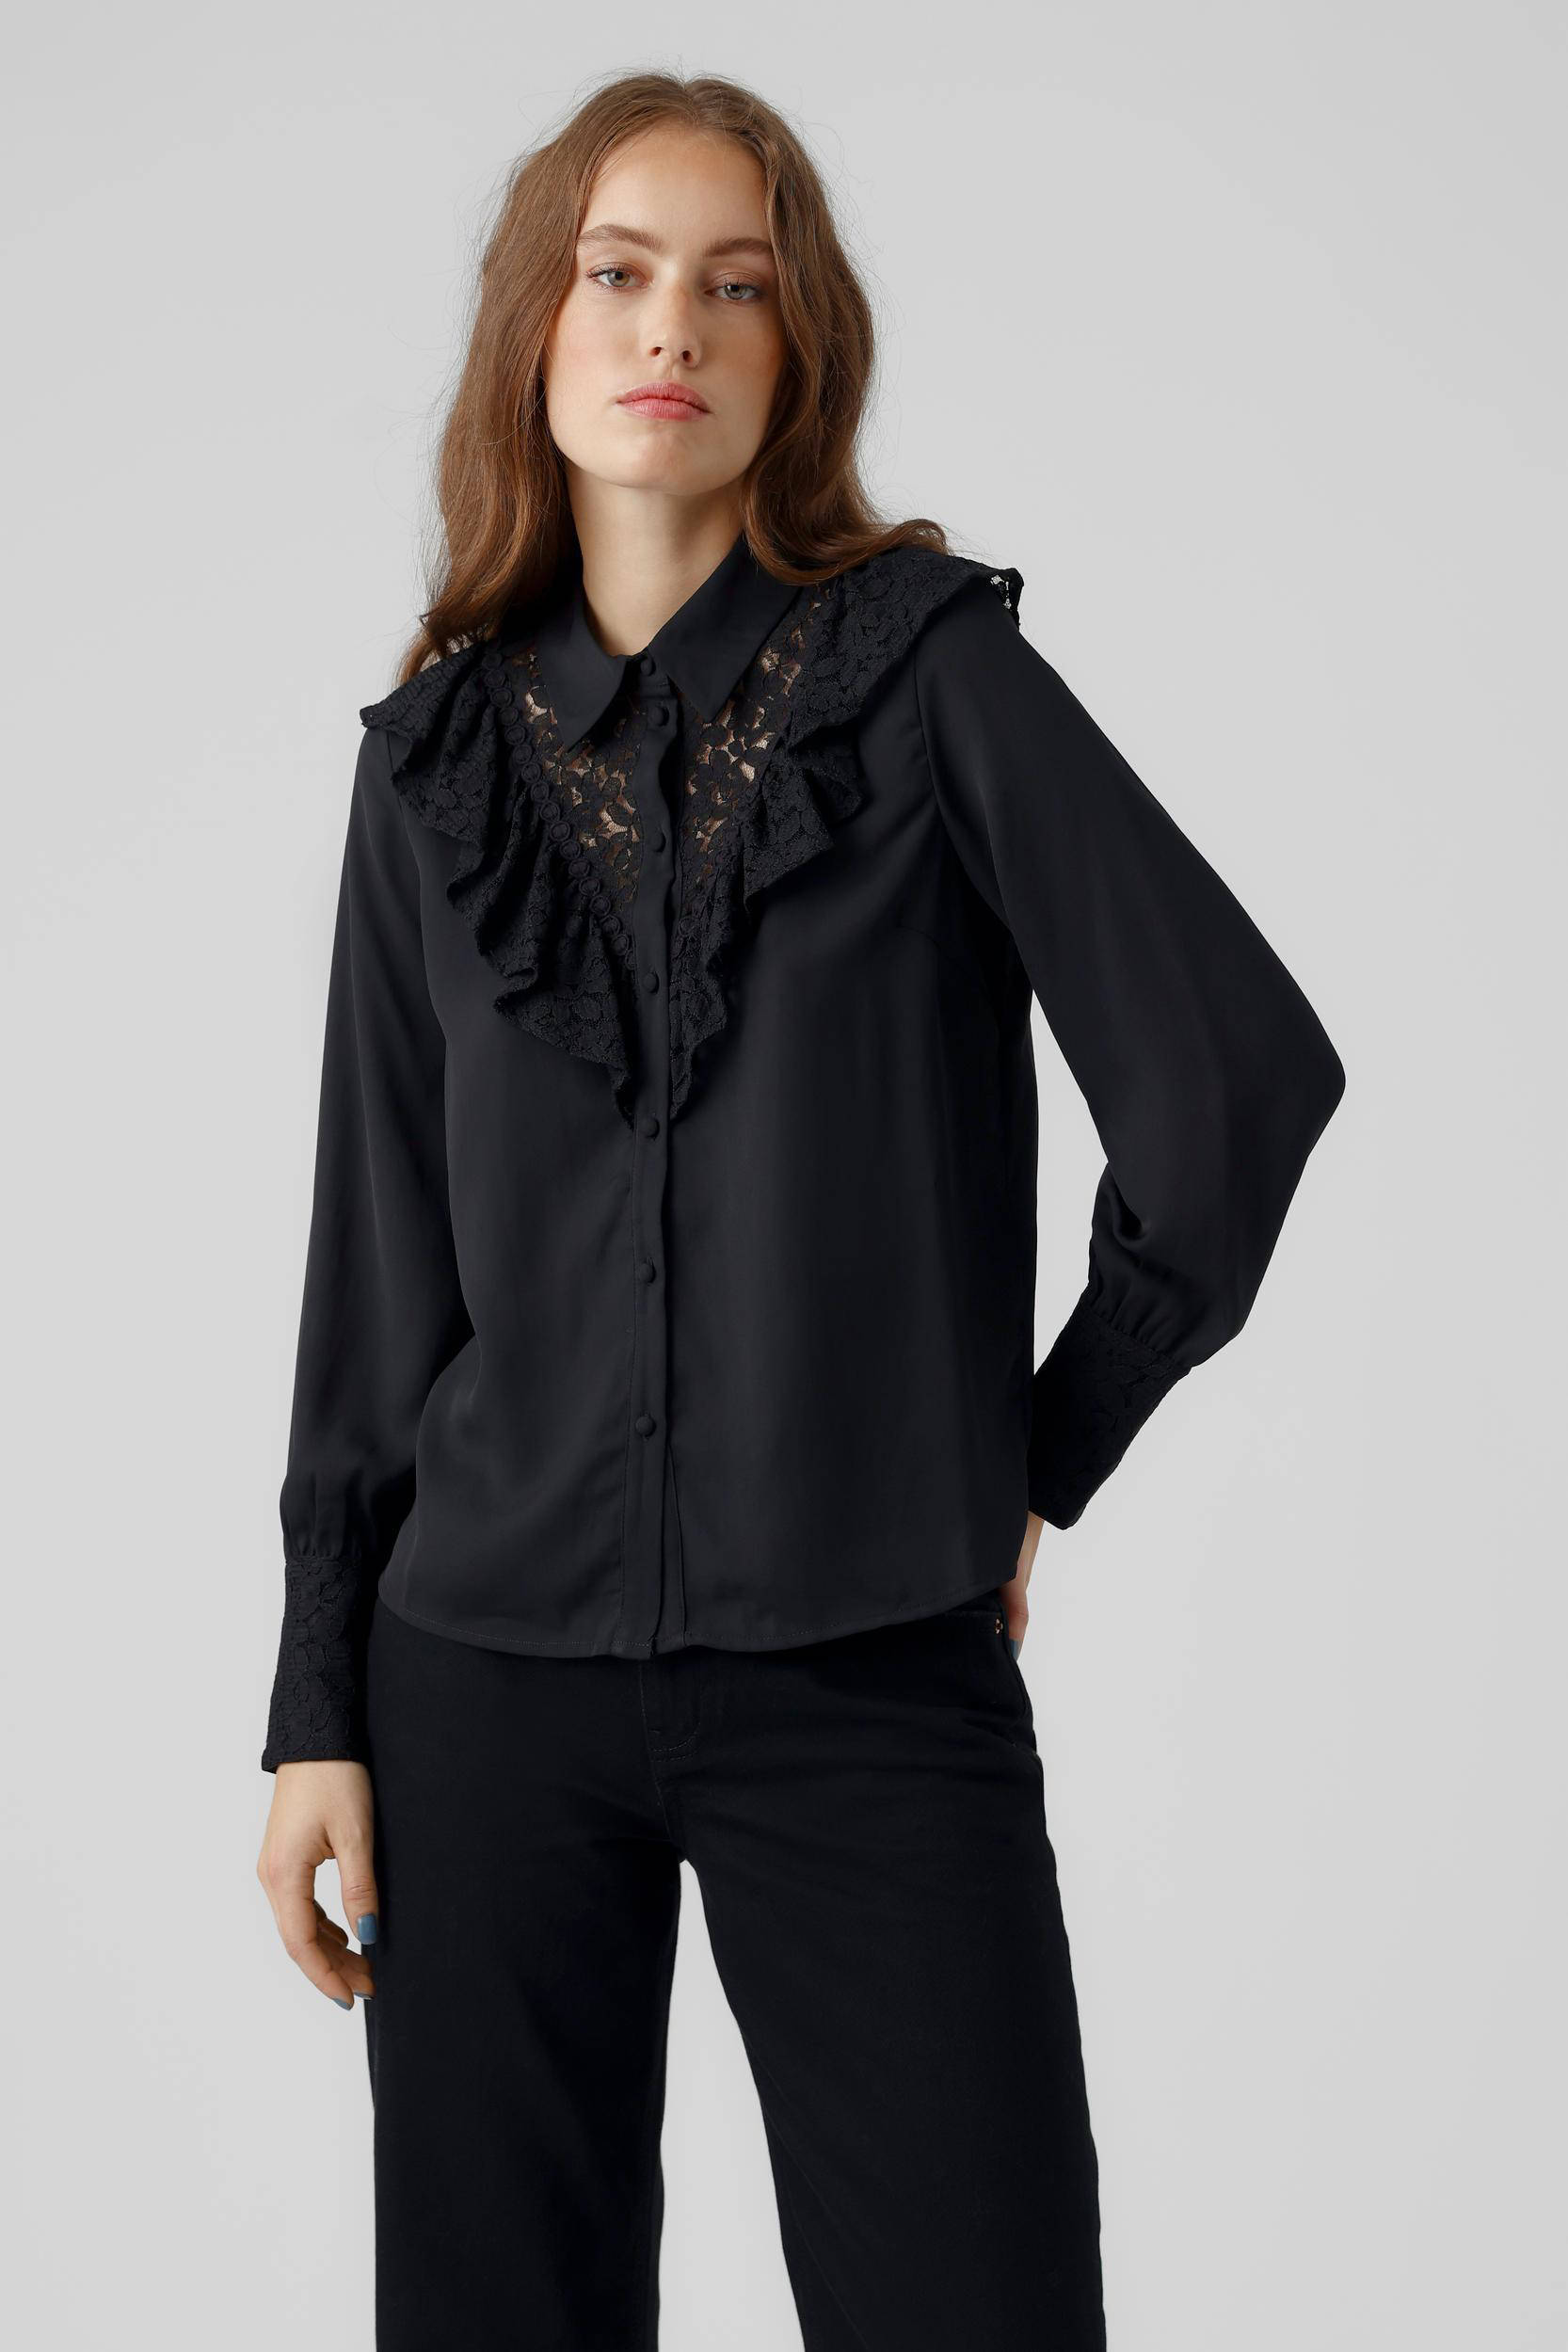 Vero Moda Ruche blouse zwart zakelijke stijl Mode Blouses Ruche blouses 